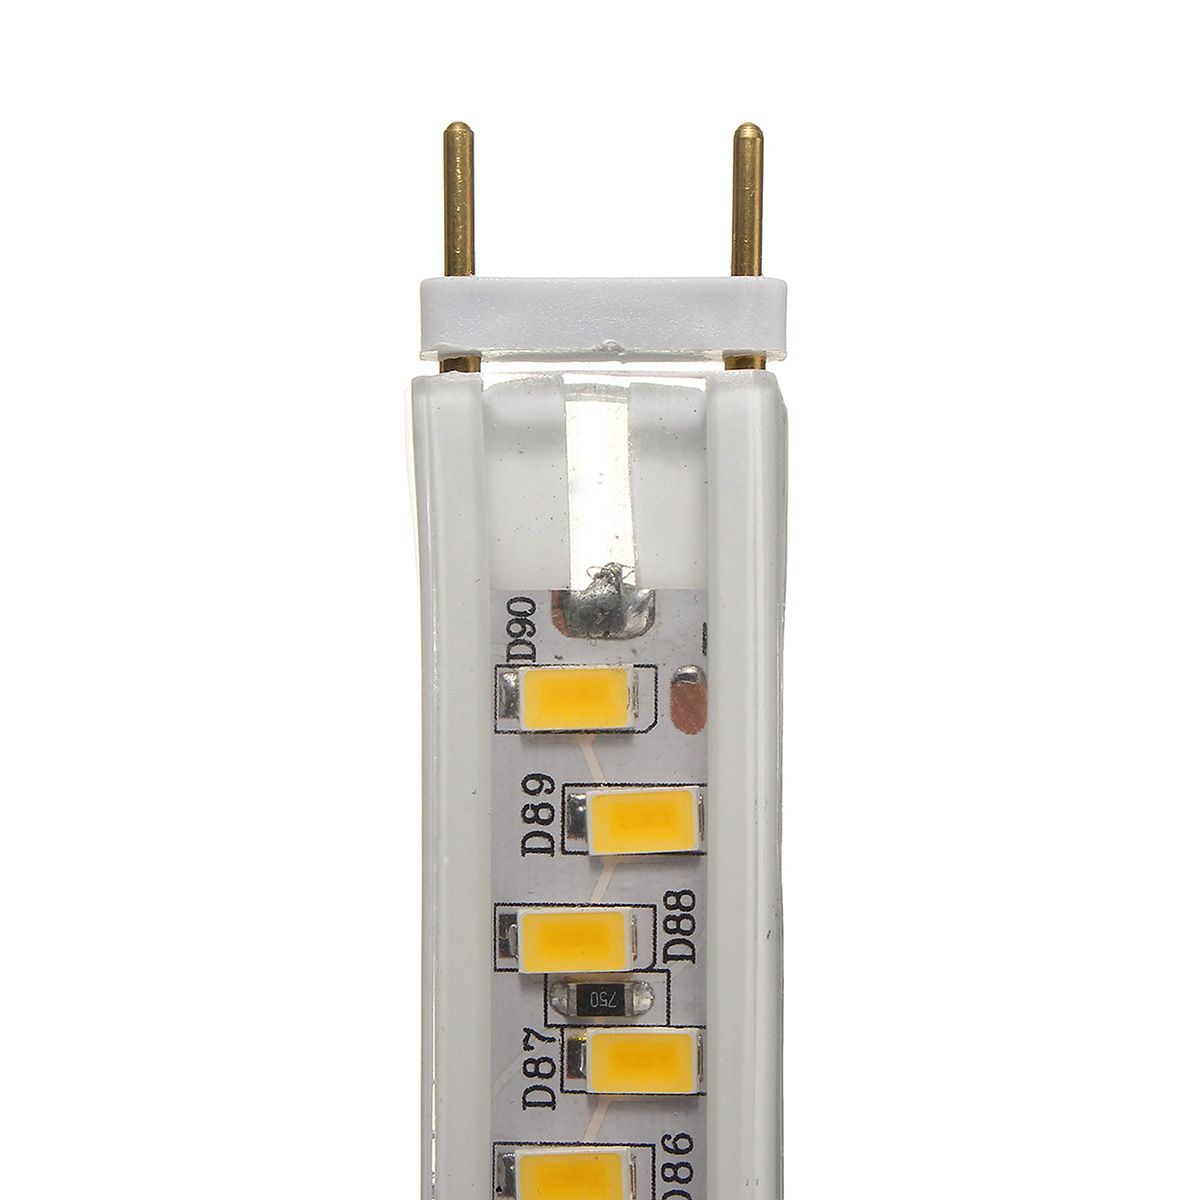 AC220V-3M-Waterproof-SMD5730-5630-Flexible-LED-Strip-Tape-Rope-Light-EU-Plug-for-Home-Decoration-1414539